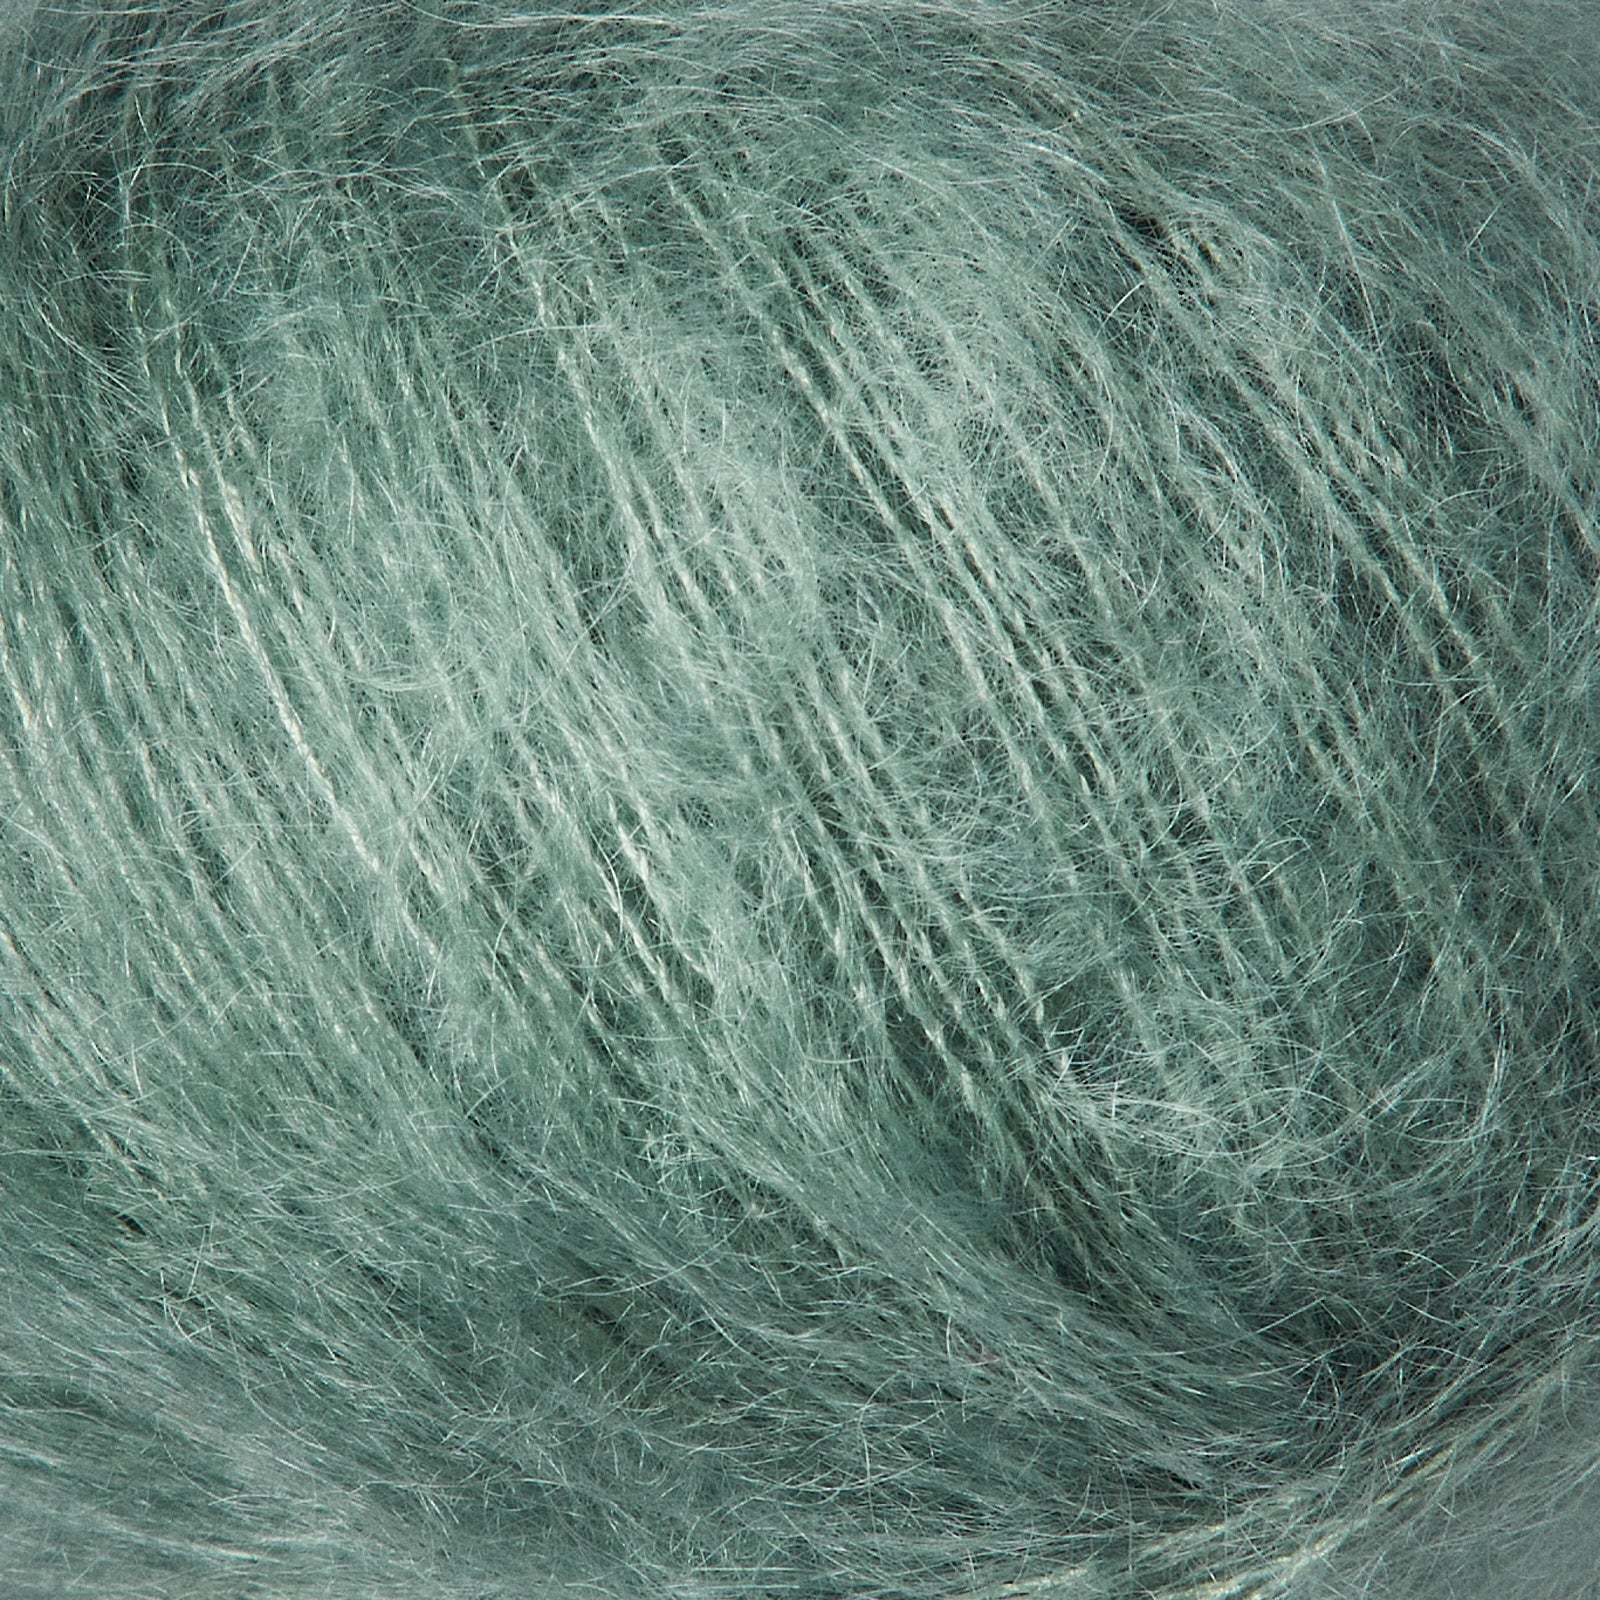 Knitting for Olive Soft Silk Mohair - Dusty Aqua